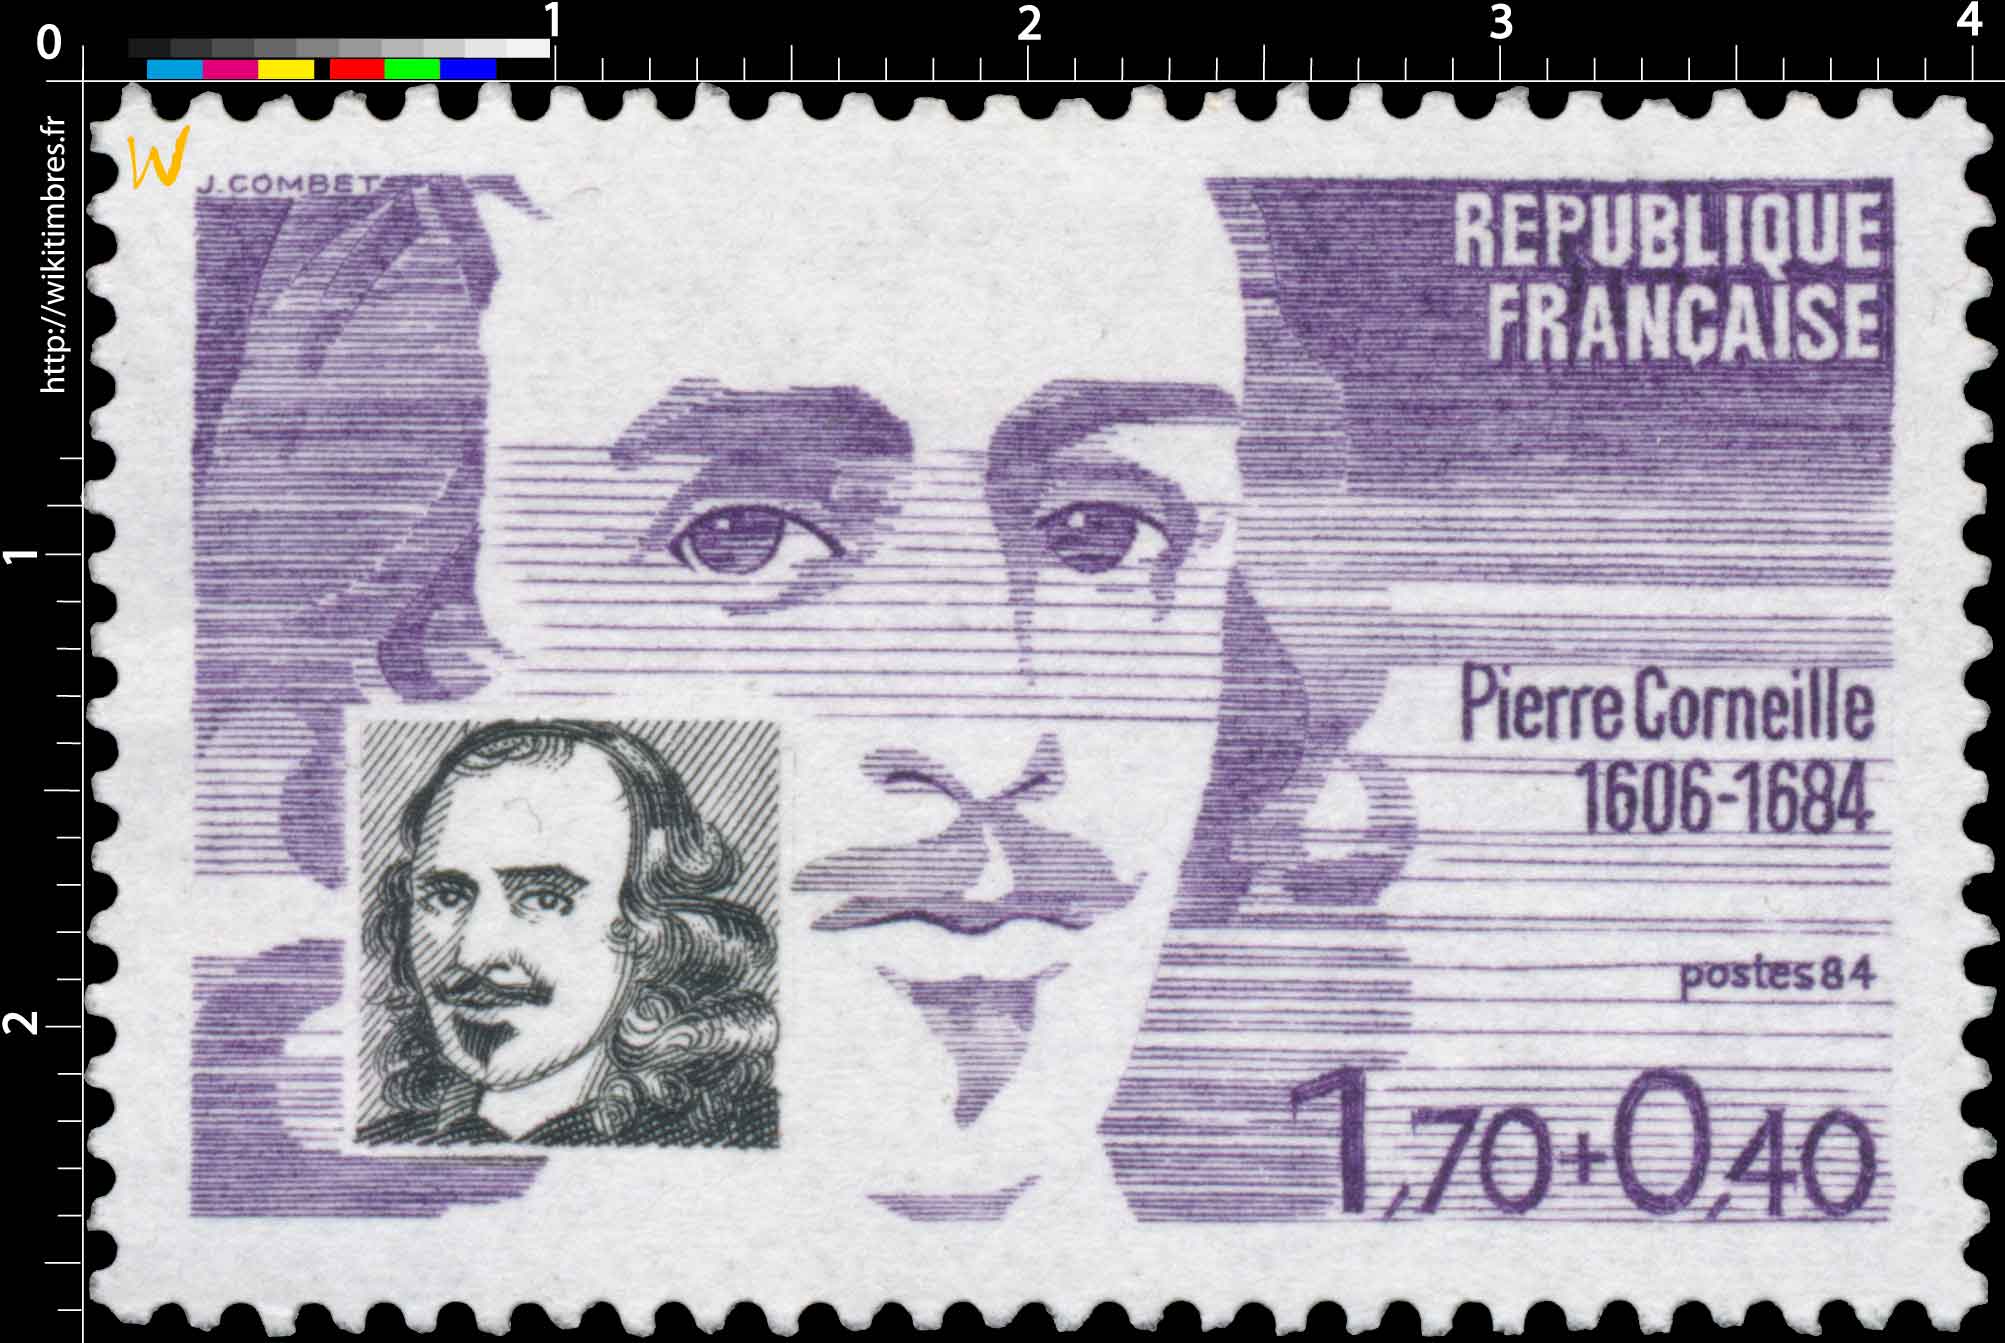 84 Pierre Corneille 1606-1684